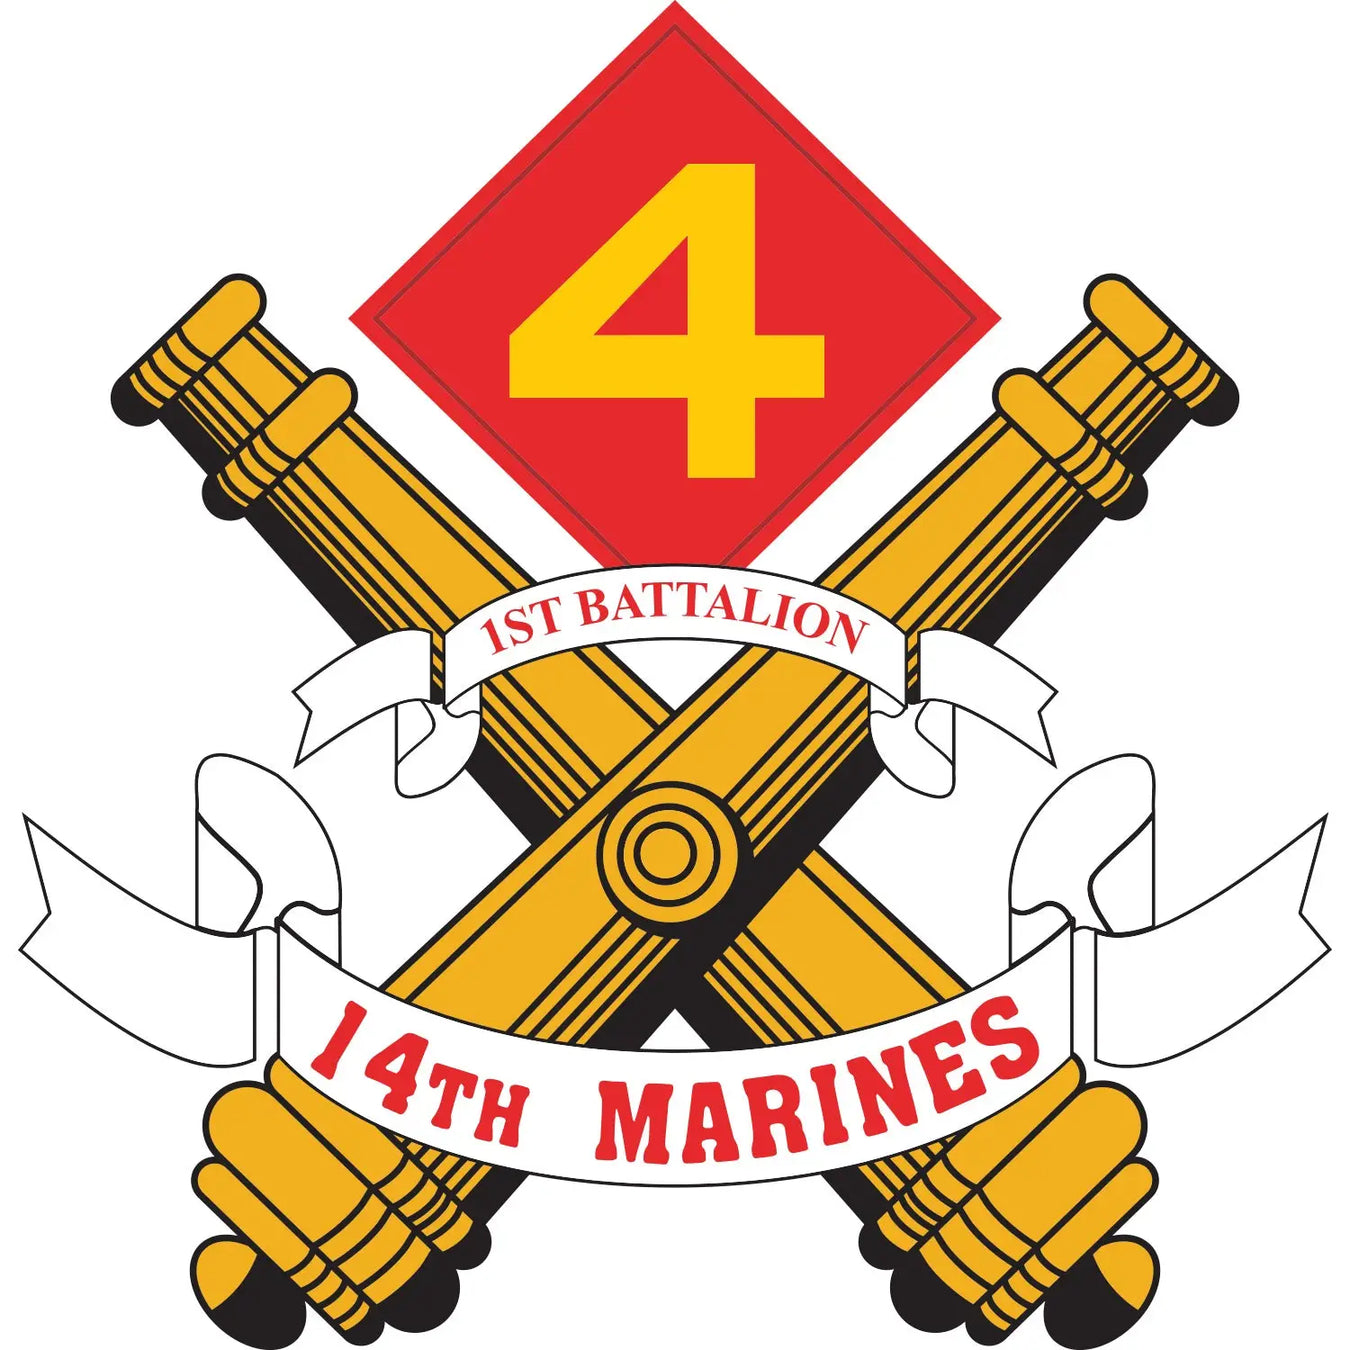 1st Battalion, 14th Marines